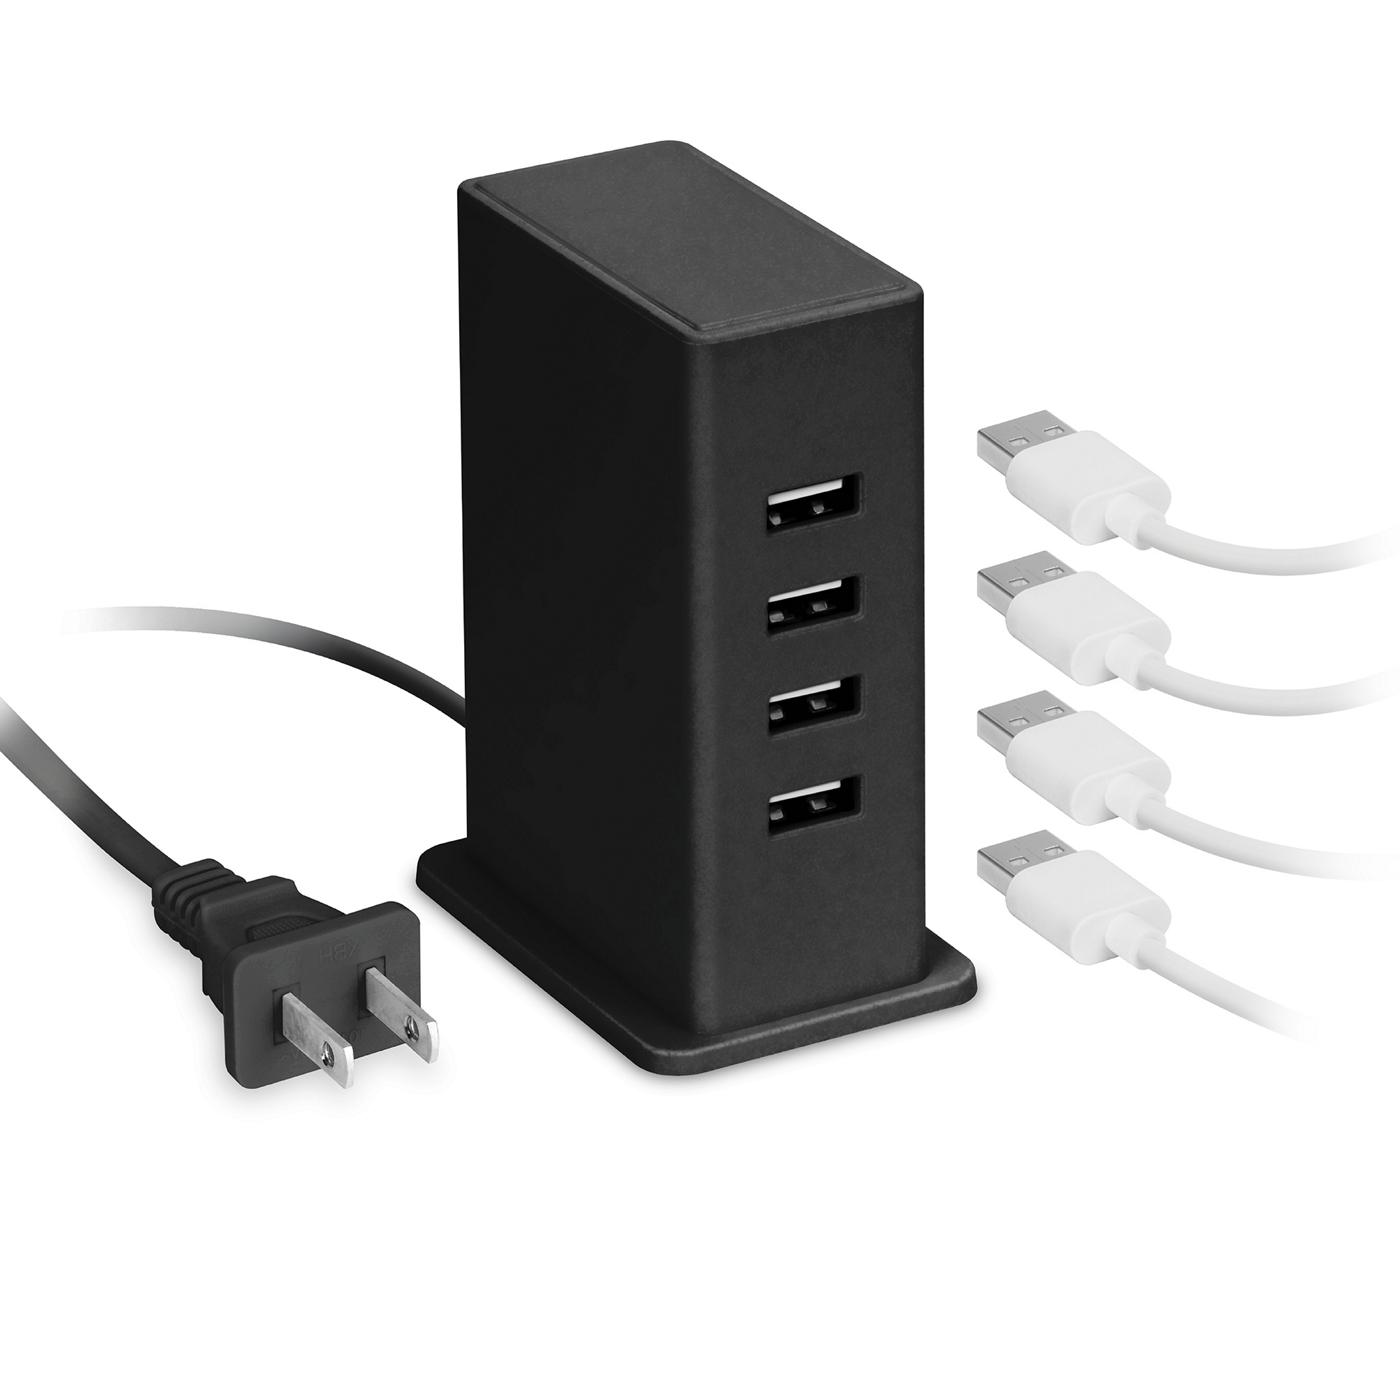 iHome 4-Port USB Power Station - Black; image 2 of 2